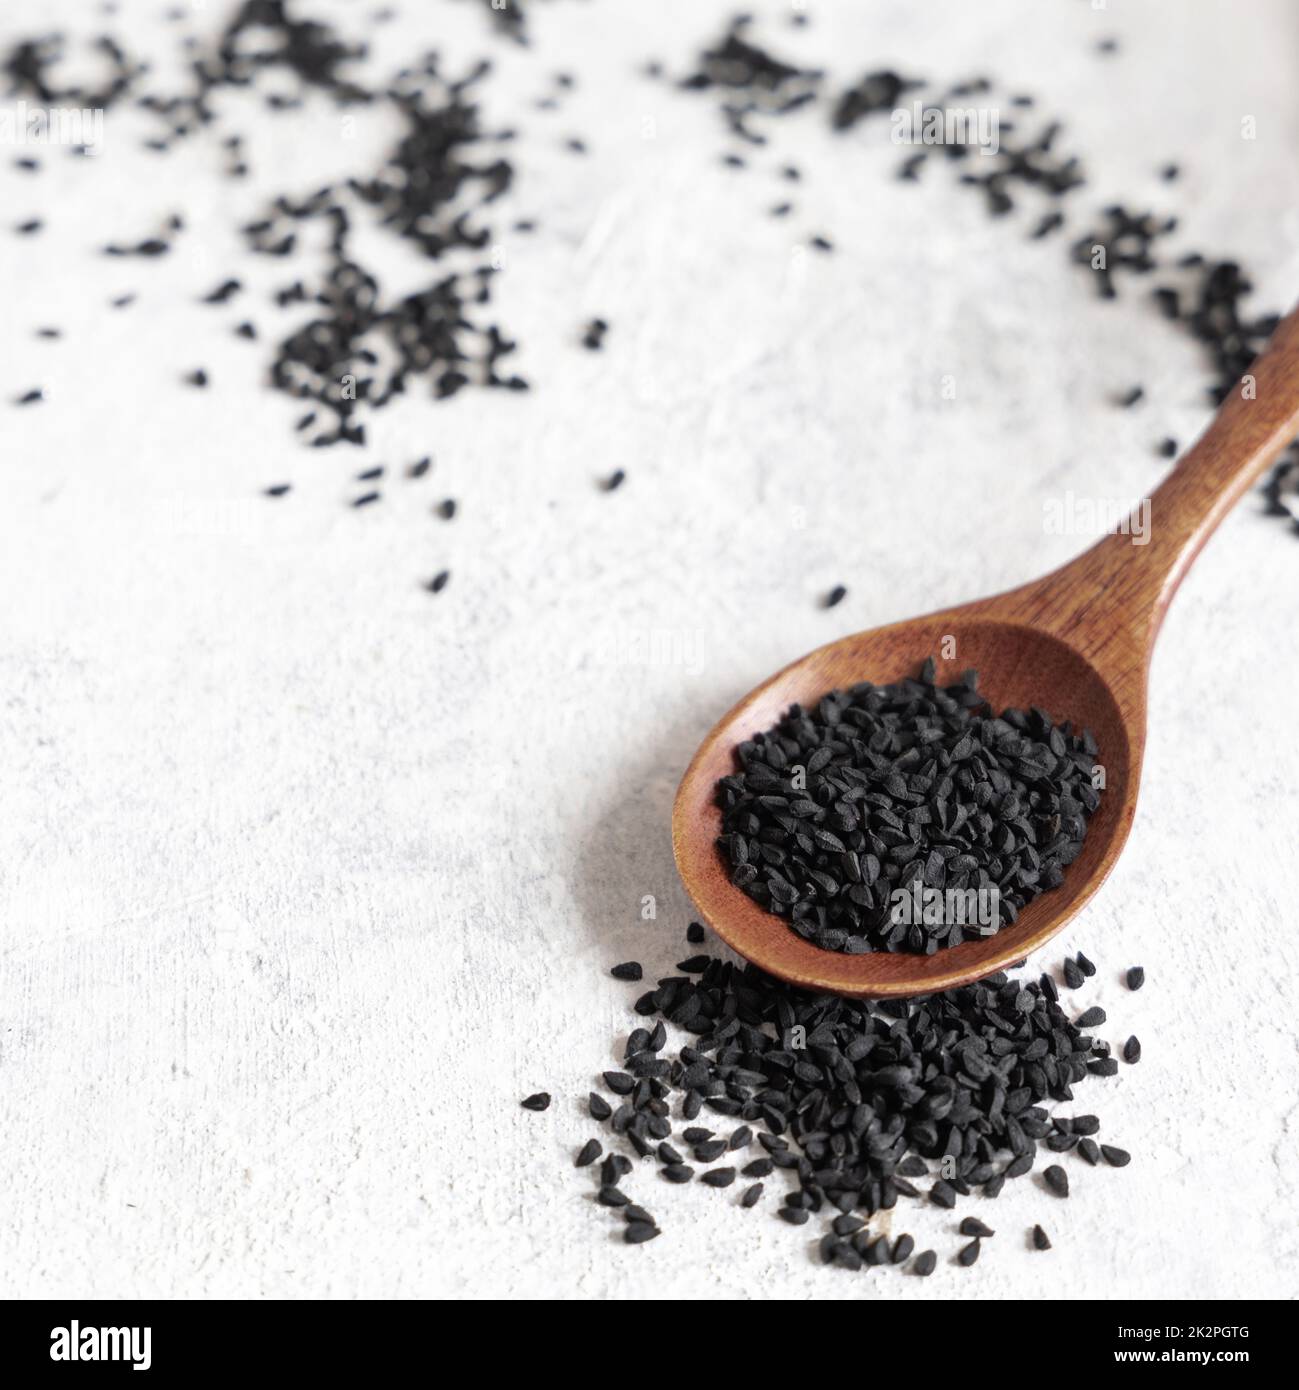 Wooden spoon of Indian spice Black cumin (nigella sativa or kalonji) seeds close up Stock Photo